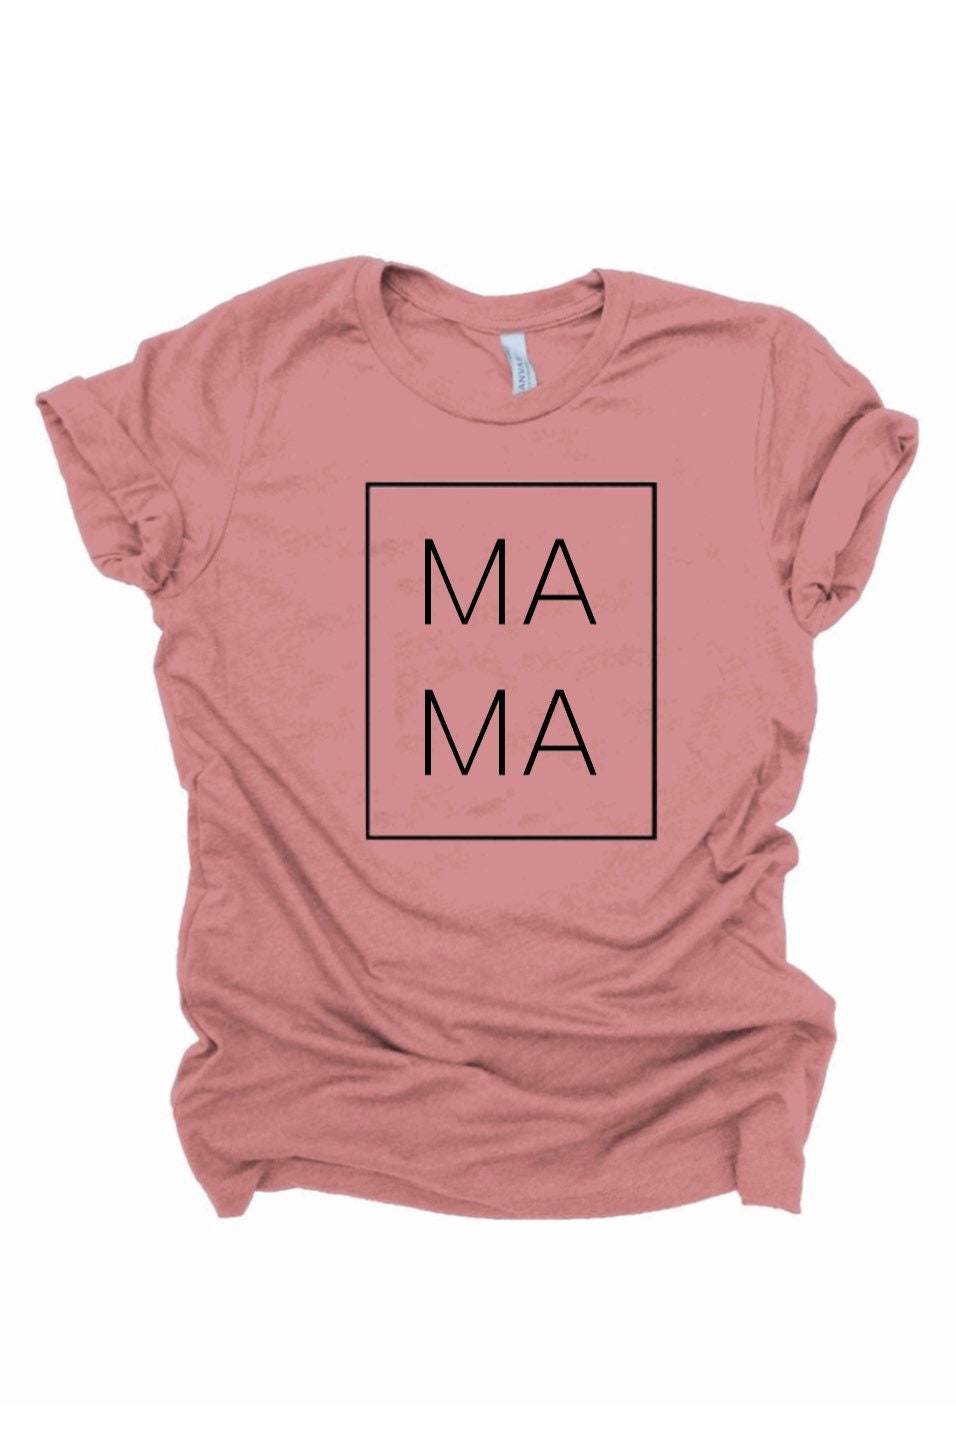 MA MA T-Shirt | Etsy